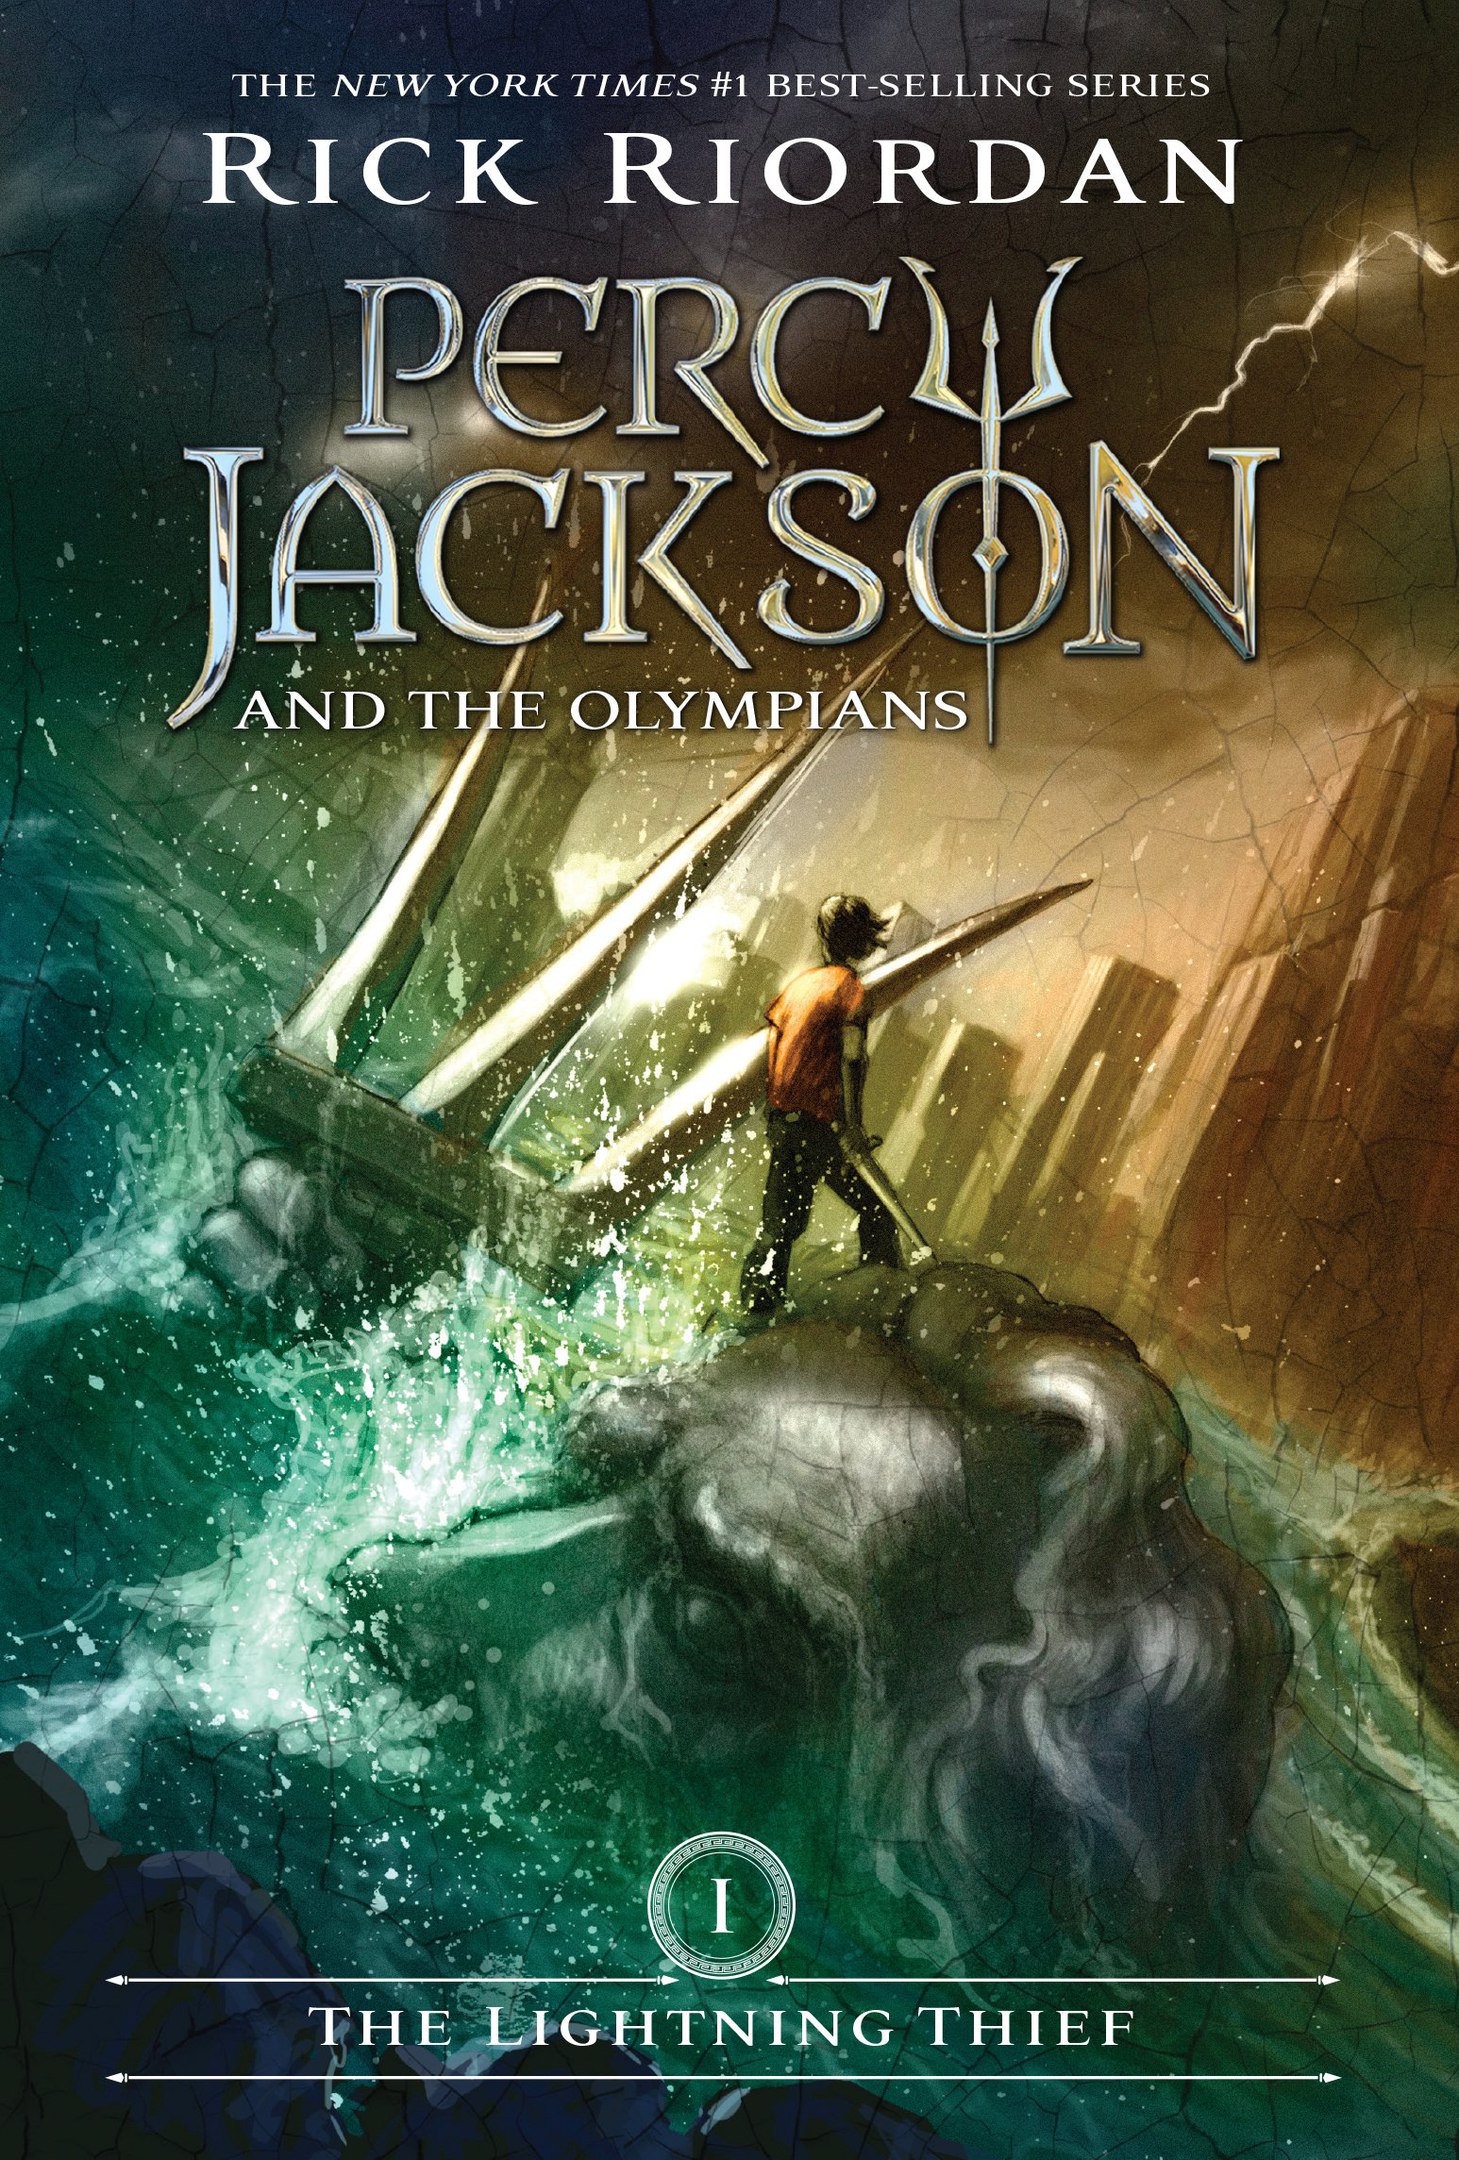 Rick Riordan – The Lightning Thief (Percy Jackson And The Olympians, Book 1)